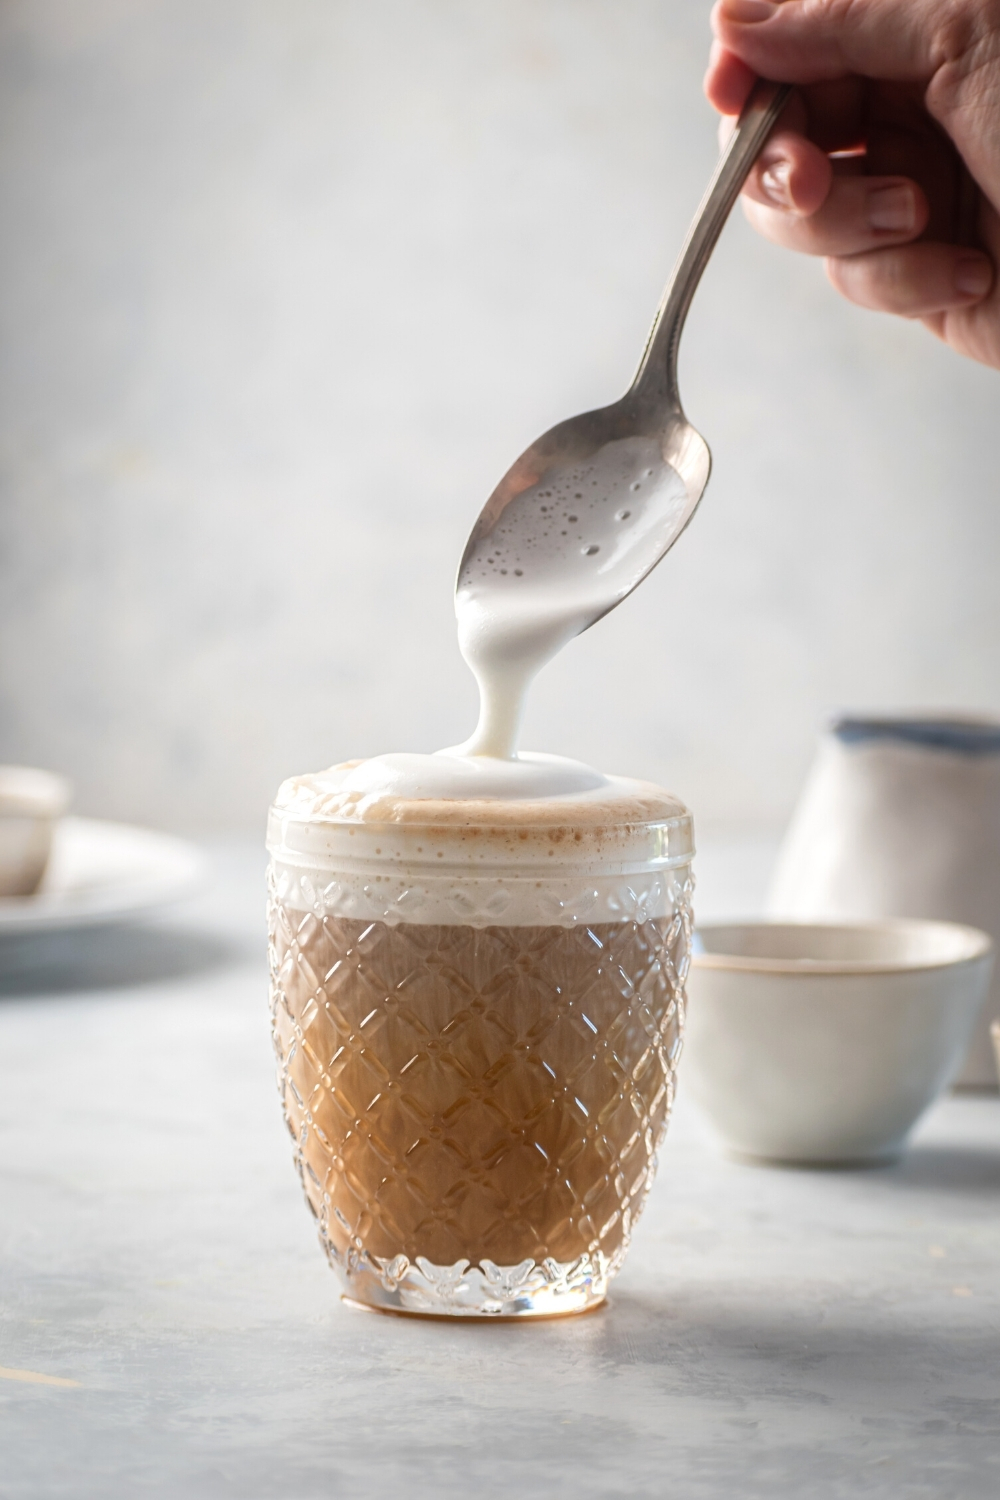 How To Make Vanilla Sweet Cream Cold Foam